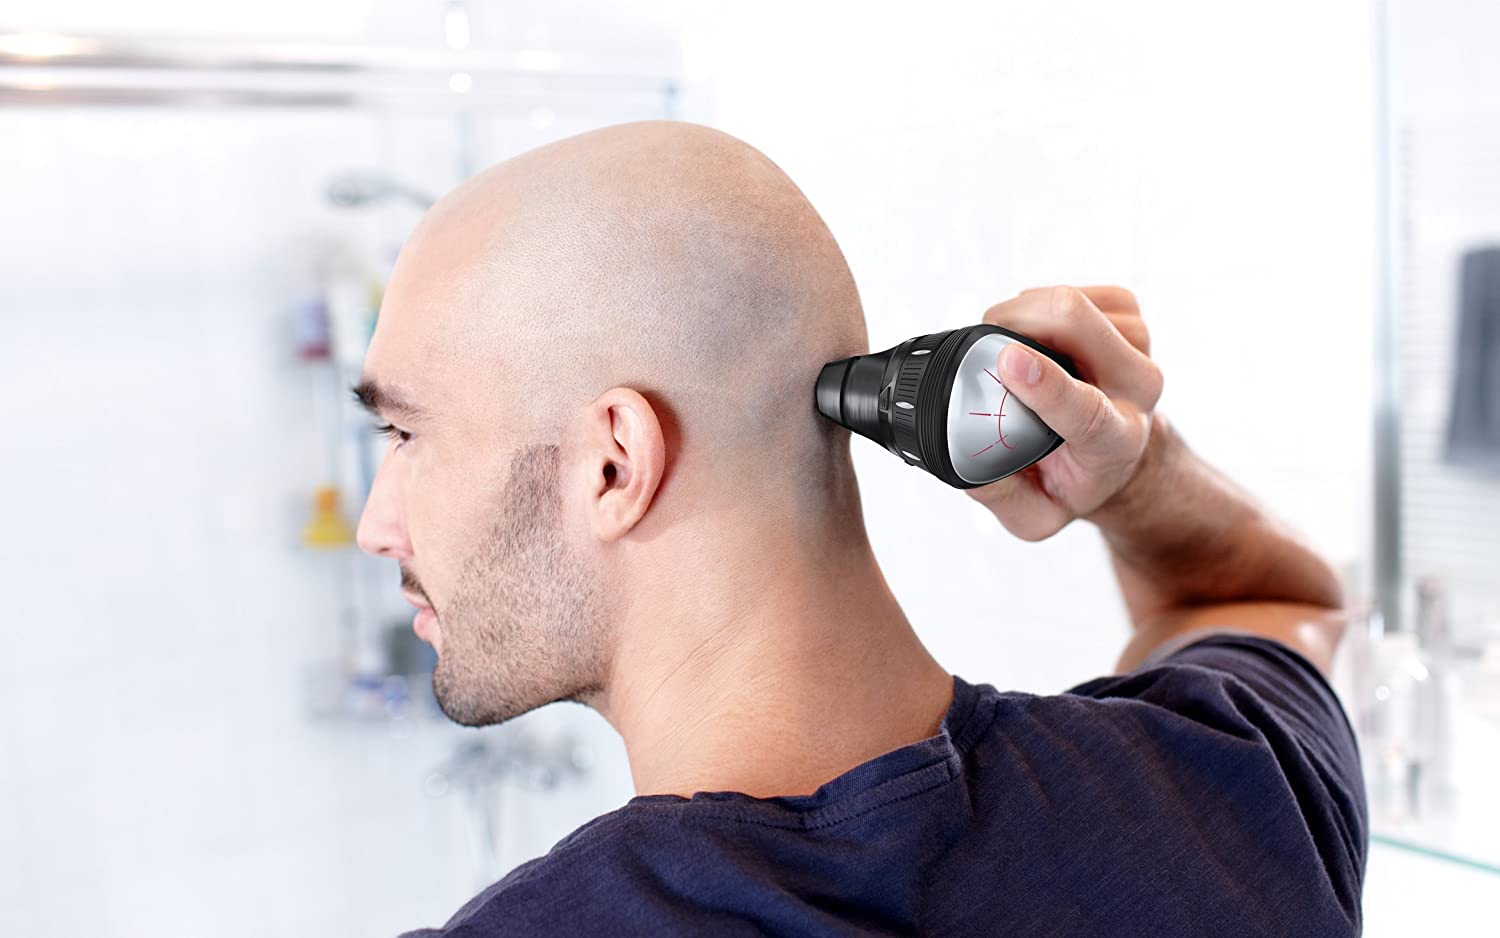 Philips QC5500 shaving head suitable for Headgroom